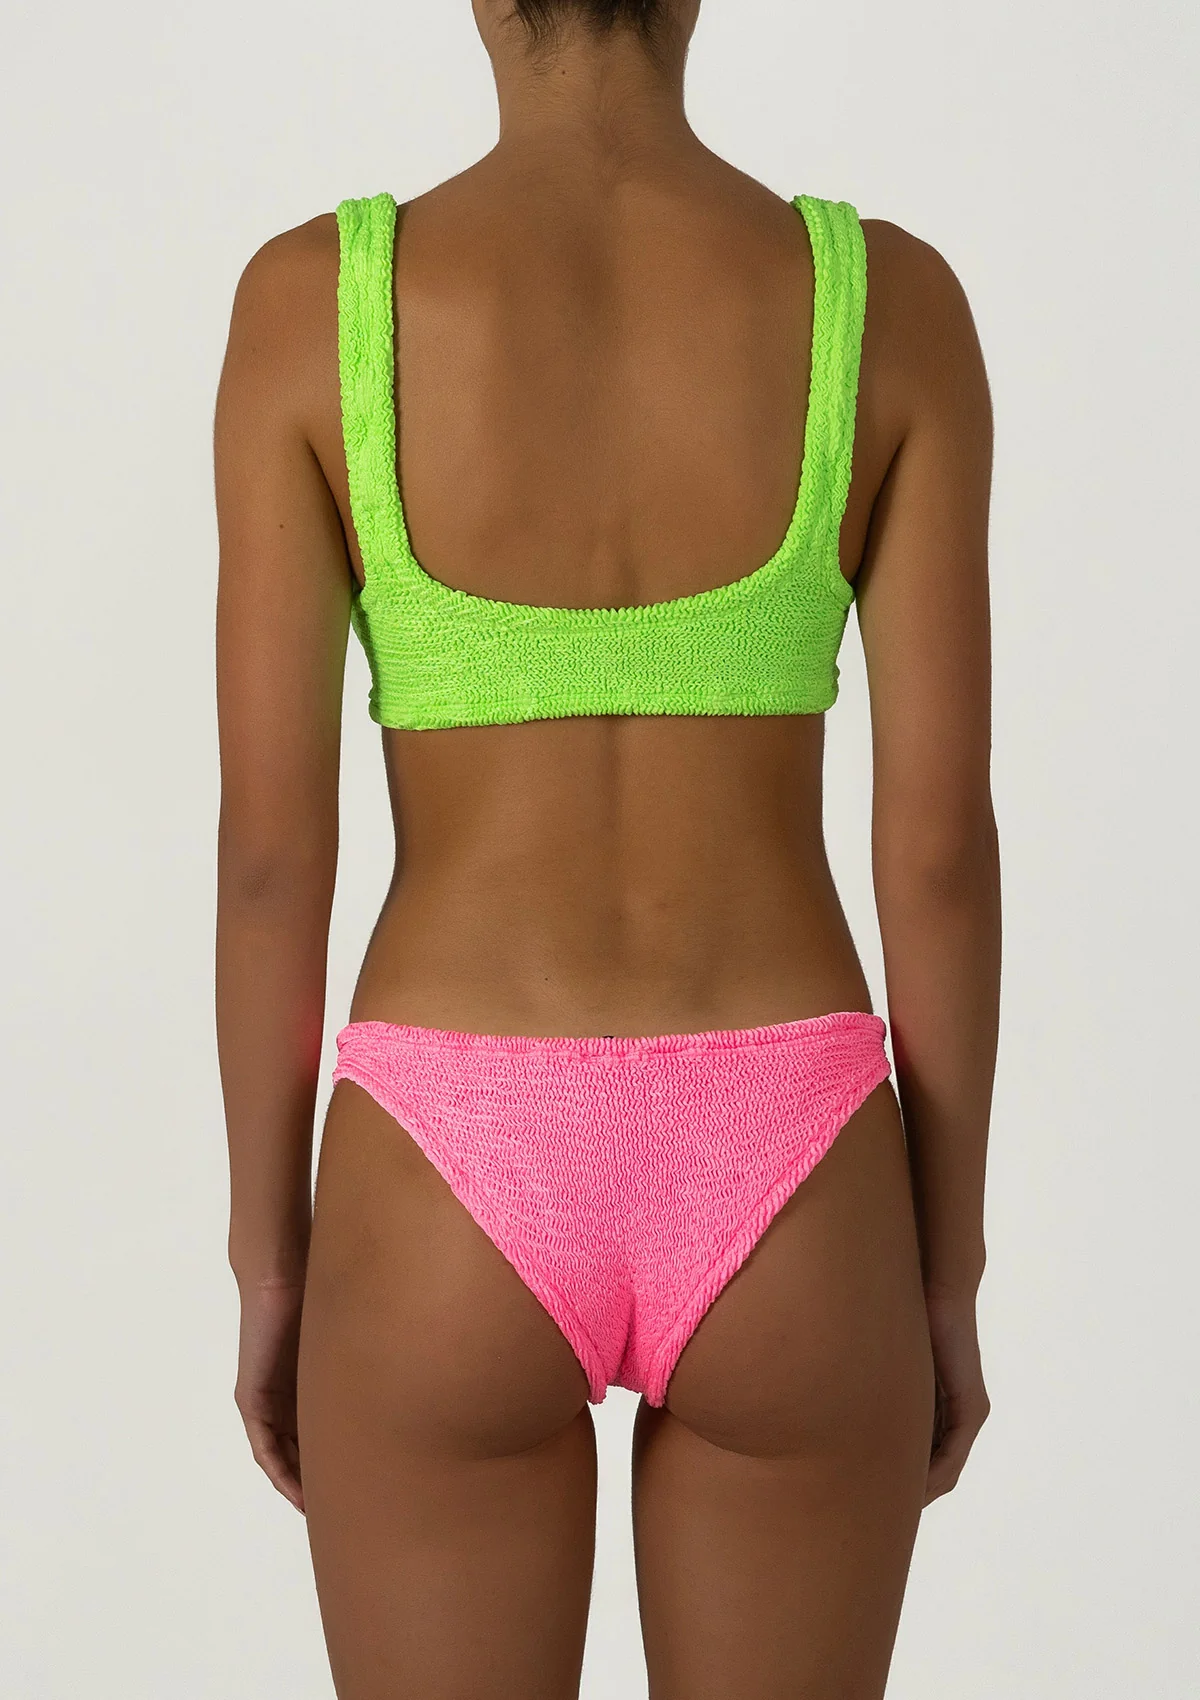 Paramidonna Ribbed Fashion Bikini Neon Green/Pink